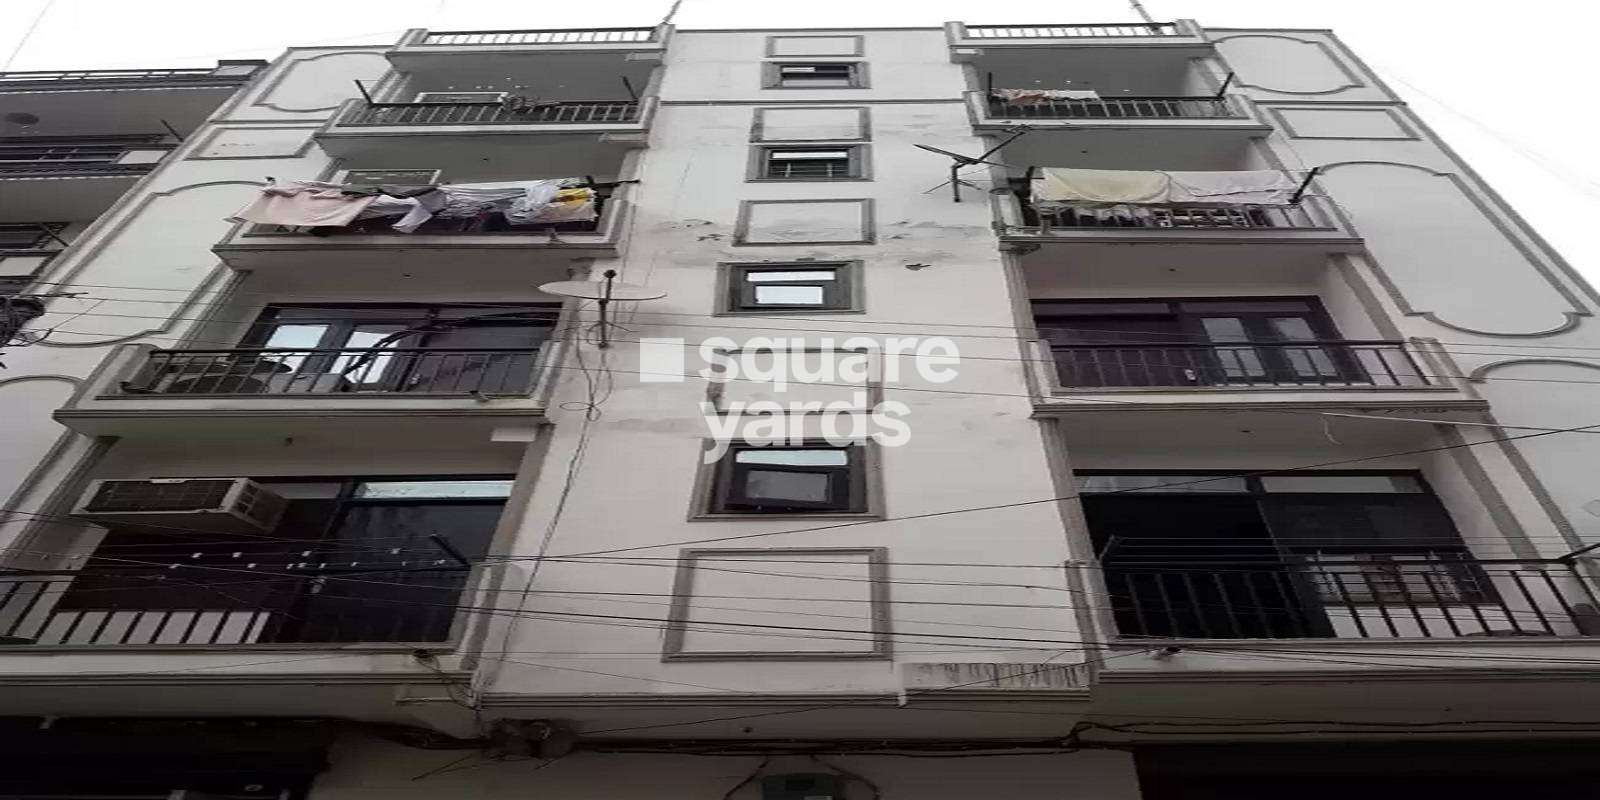 Balaji Apartments Palam Vihar Cover Image